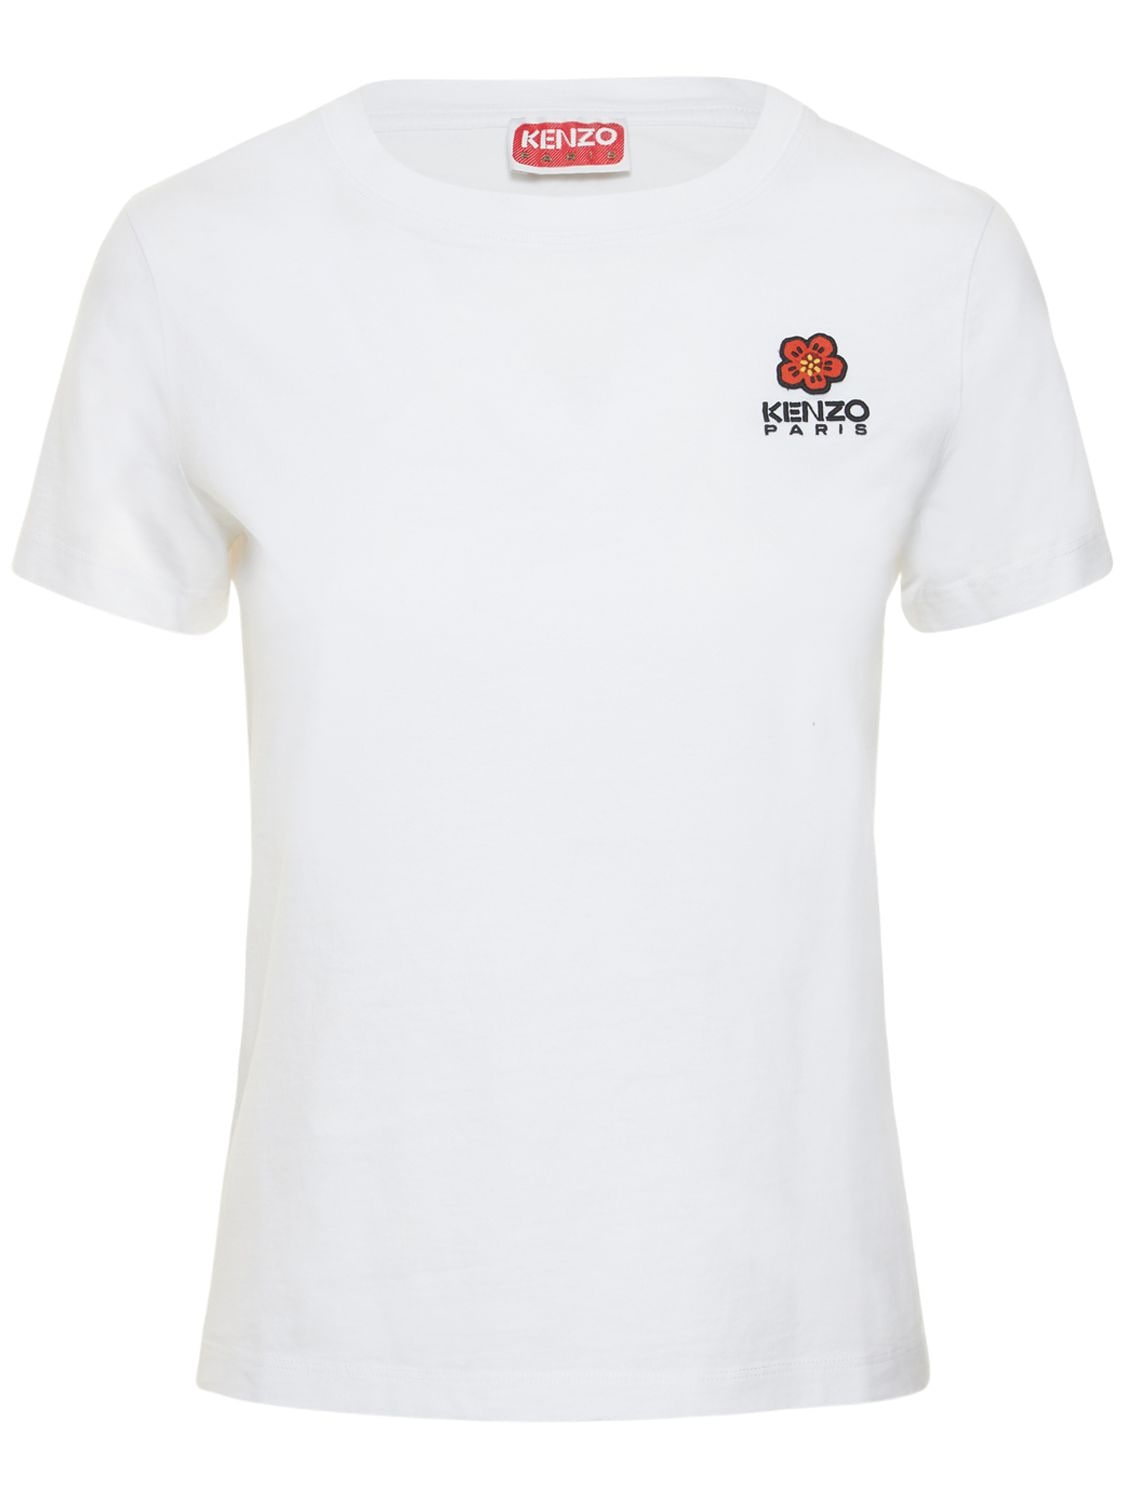 KENZO PARIS Crest Logo Classic T-shirt